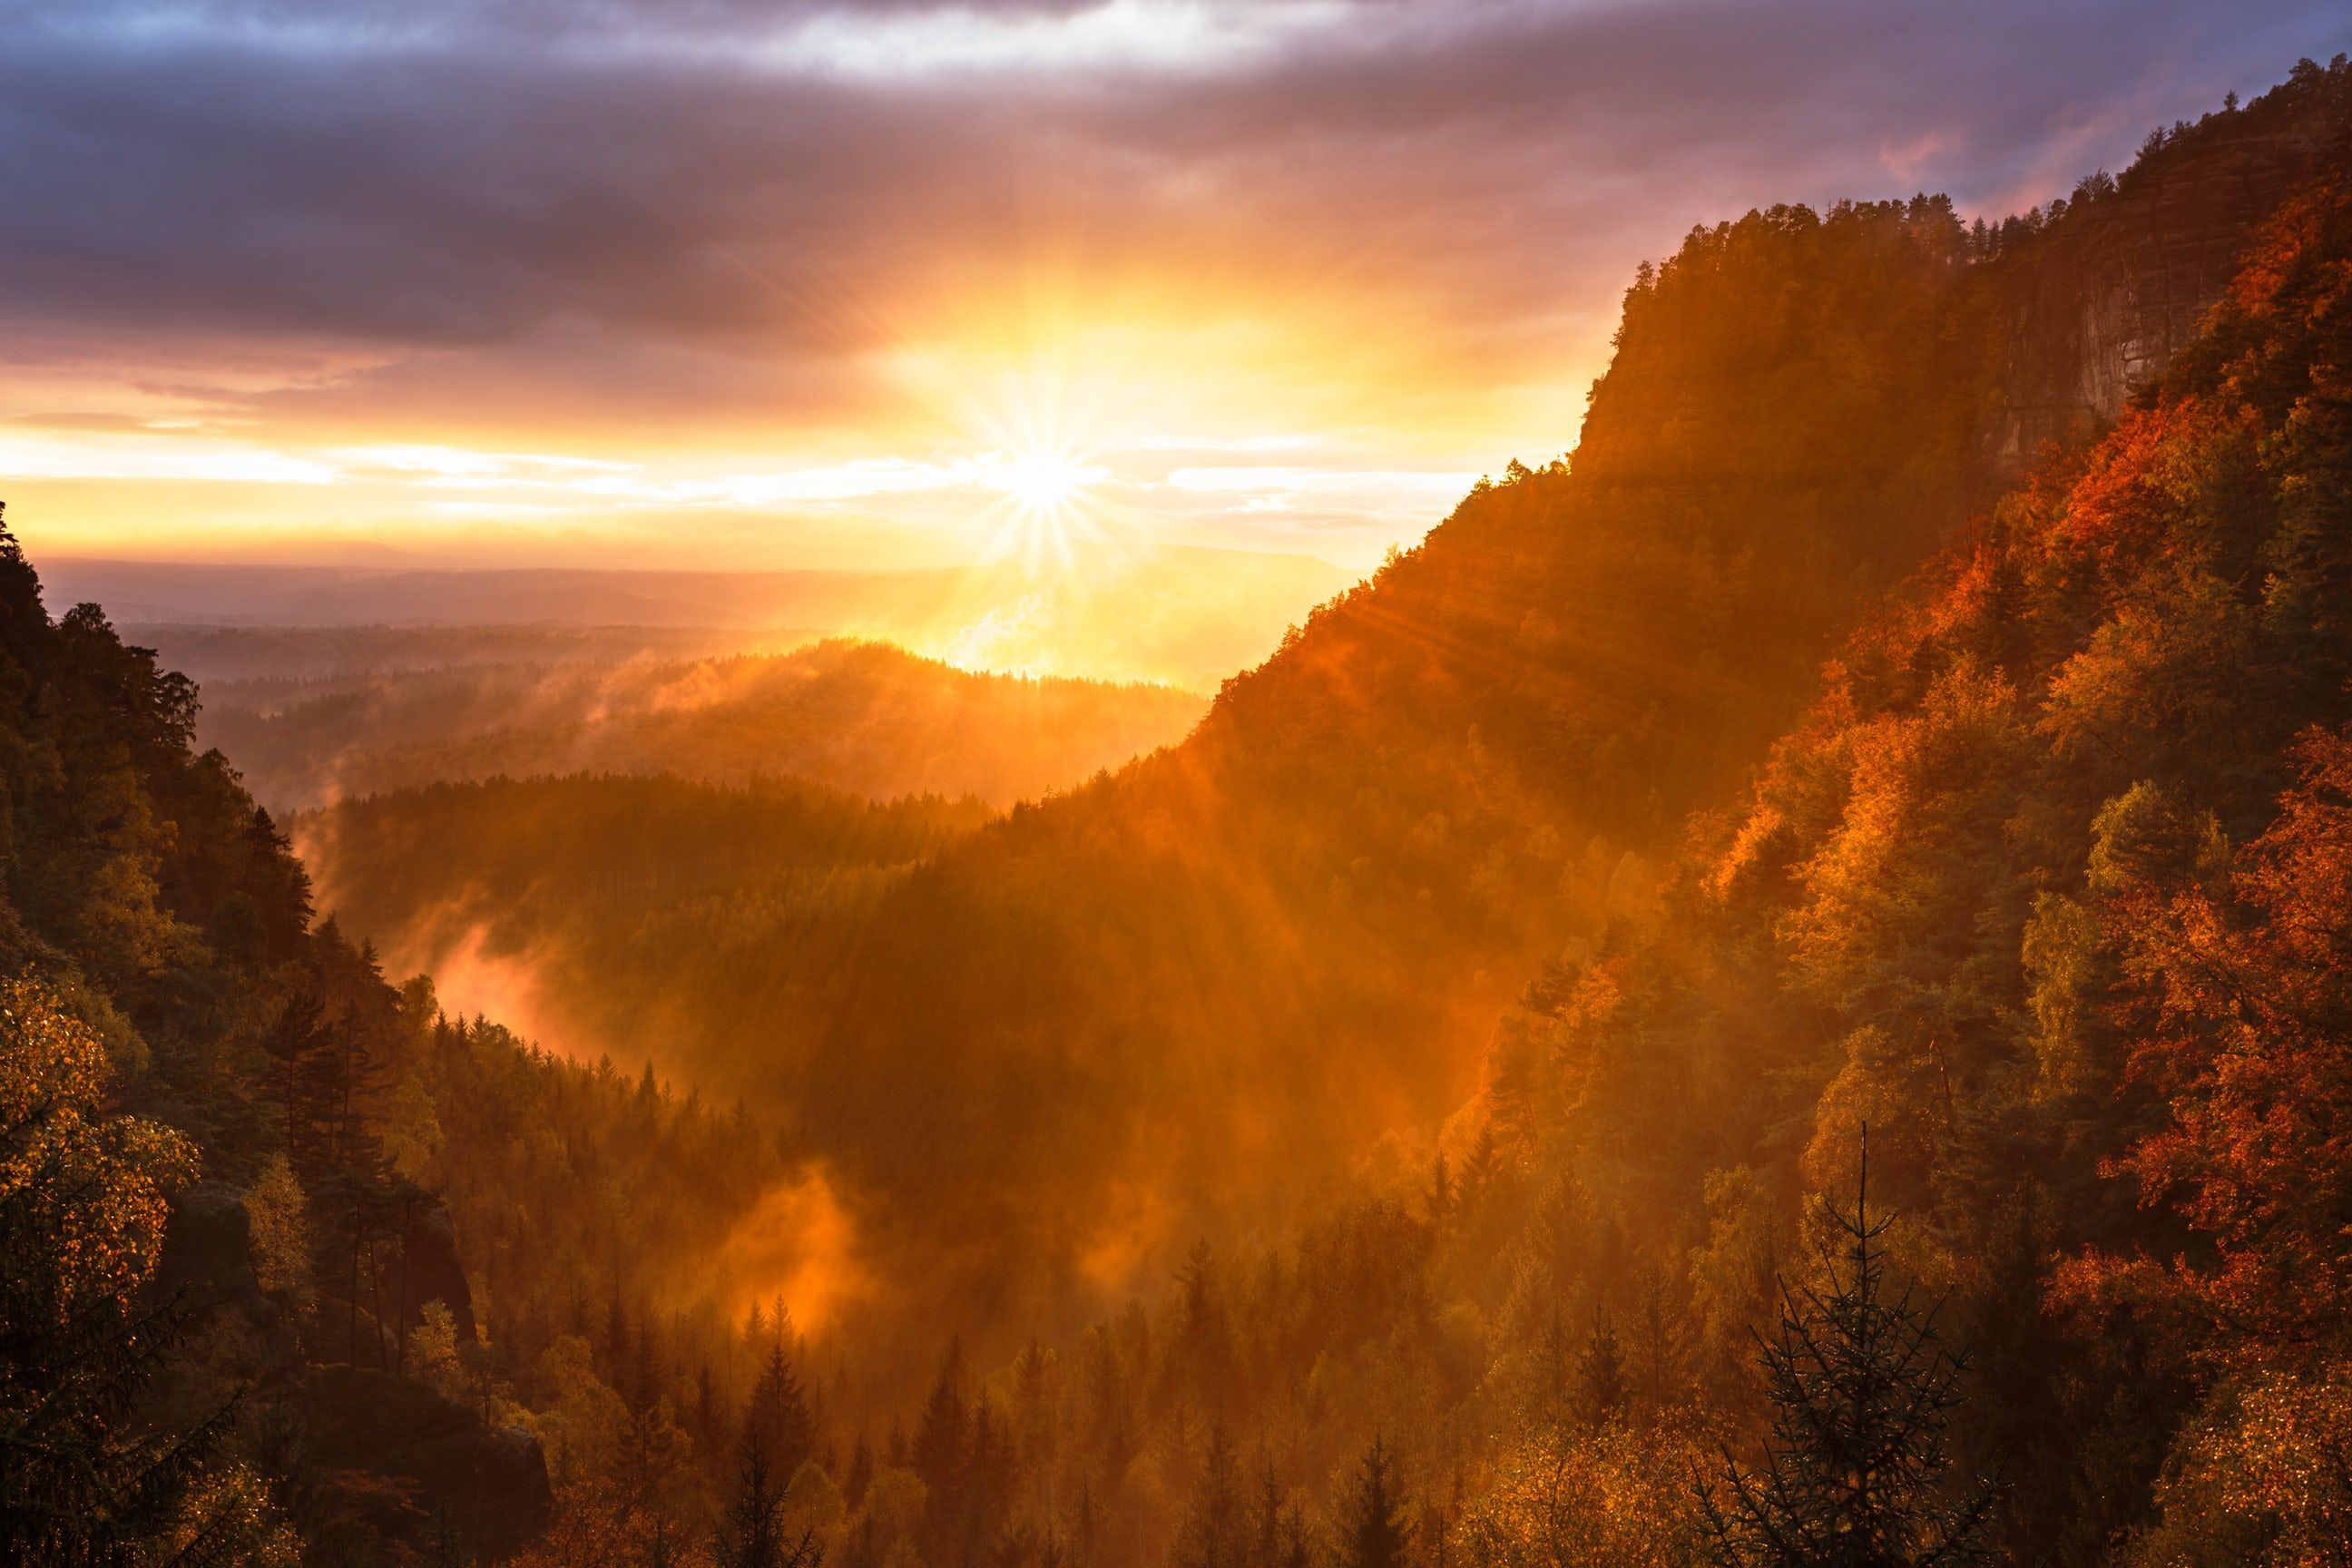 Streaks of sunlight at sunset through a forest valley at Hřensko, Czech Republic. Landscape, Photo, Nature